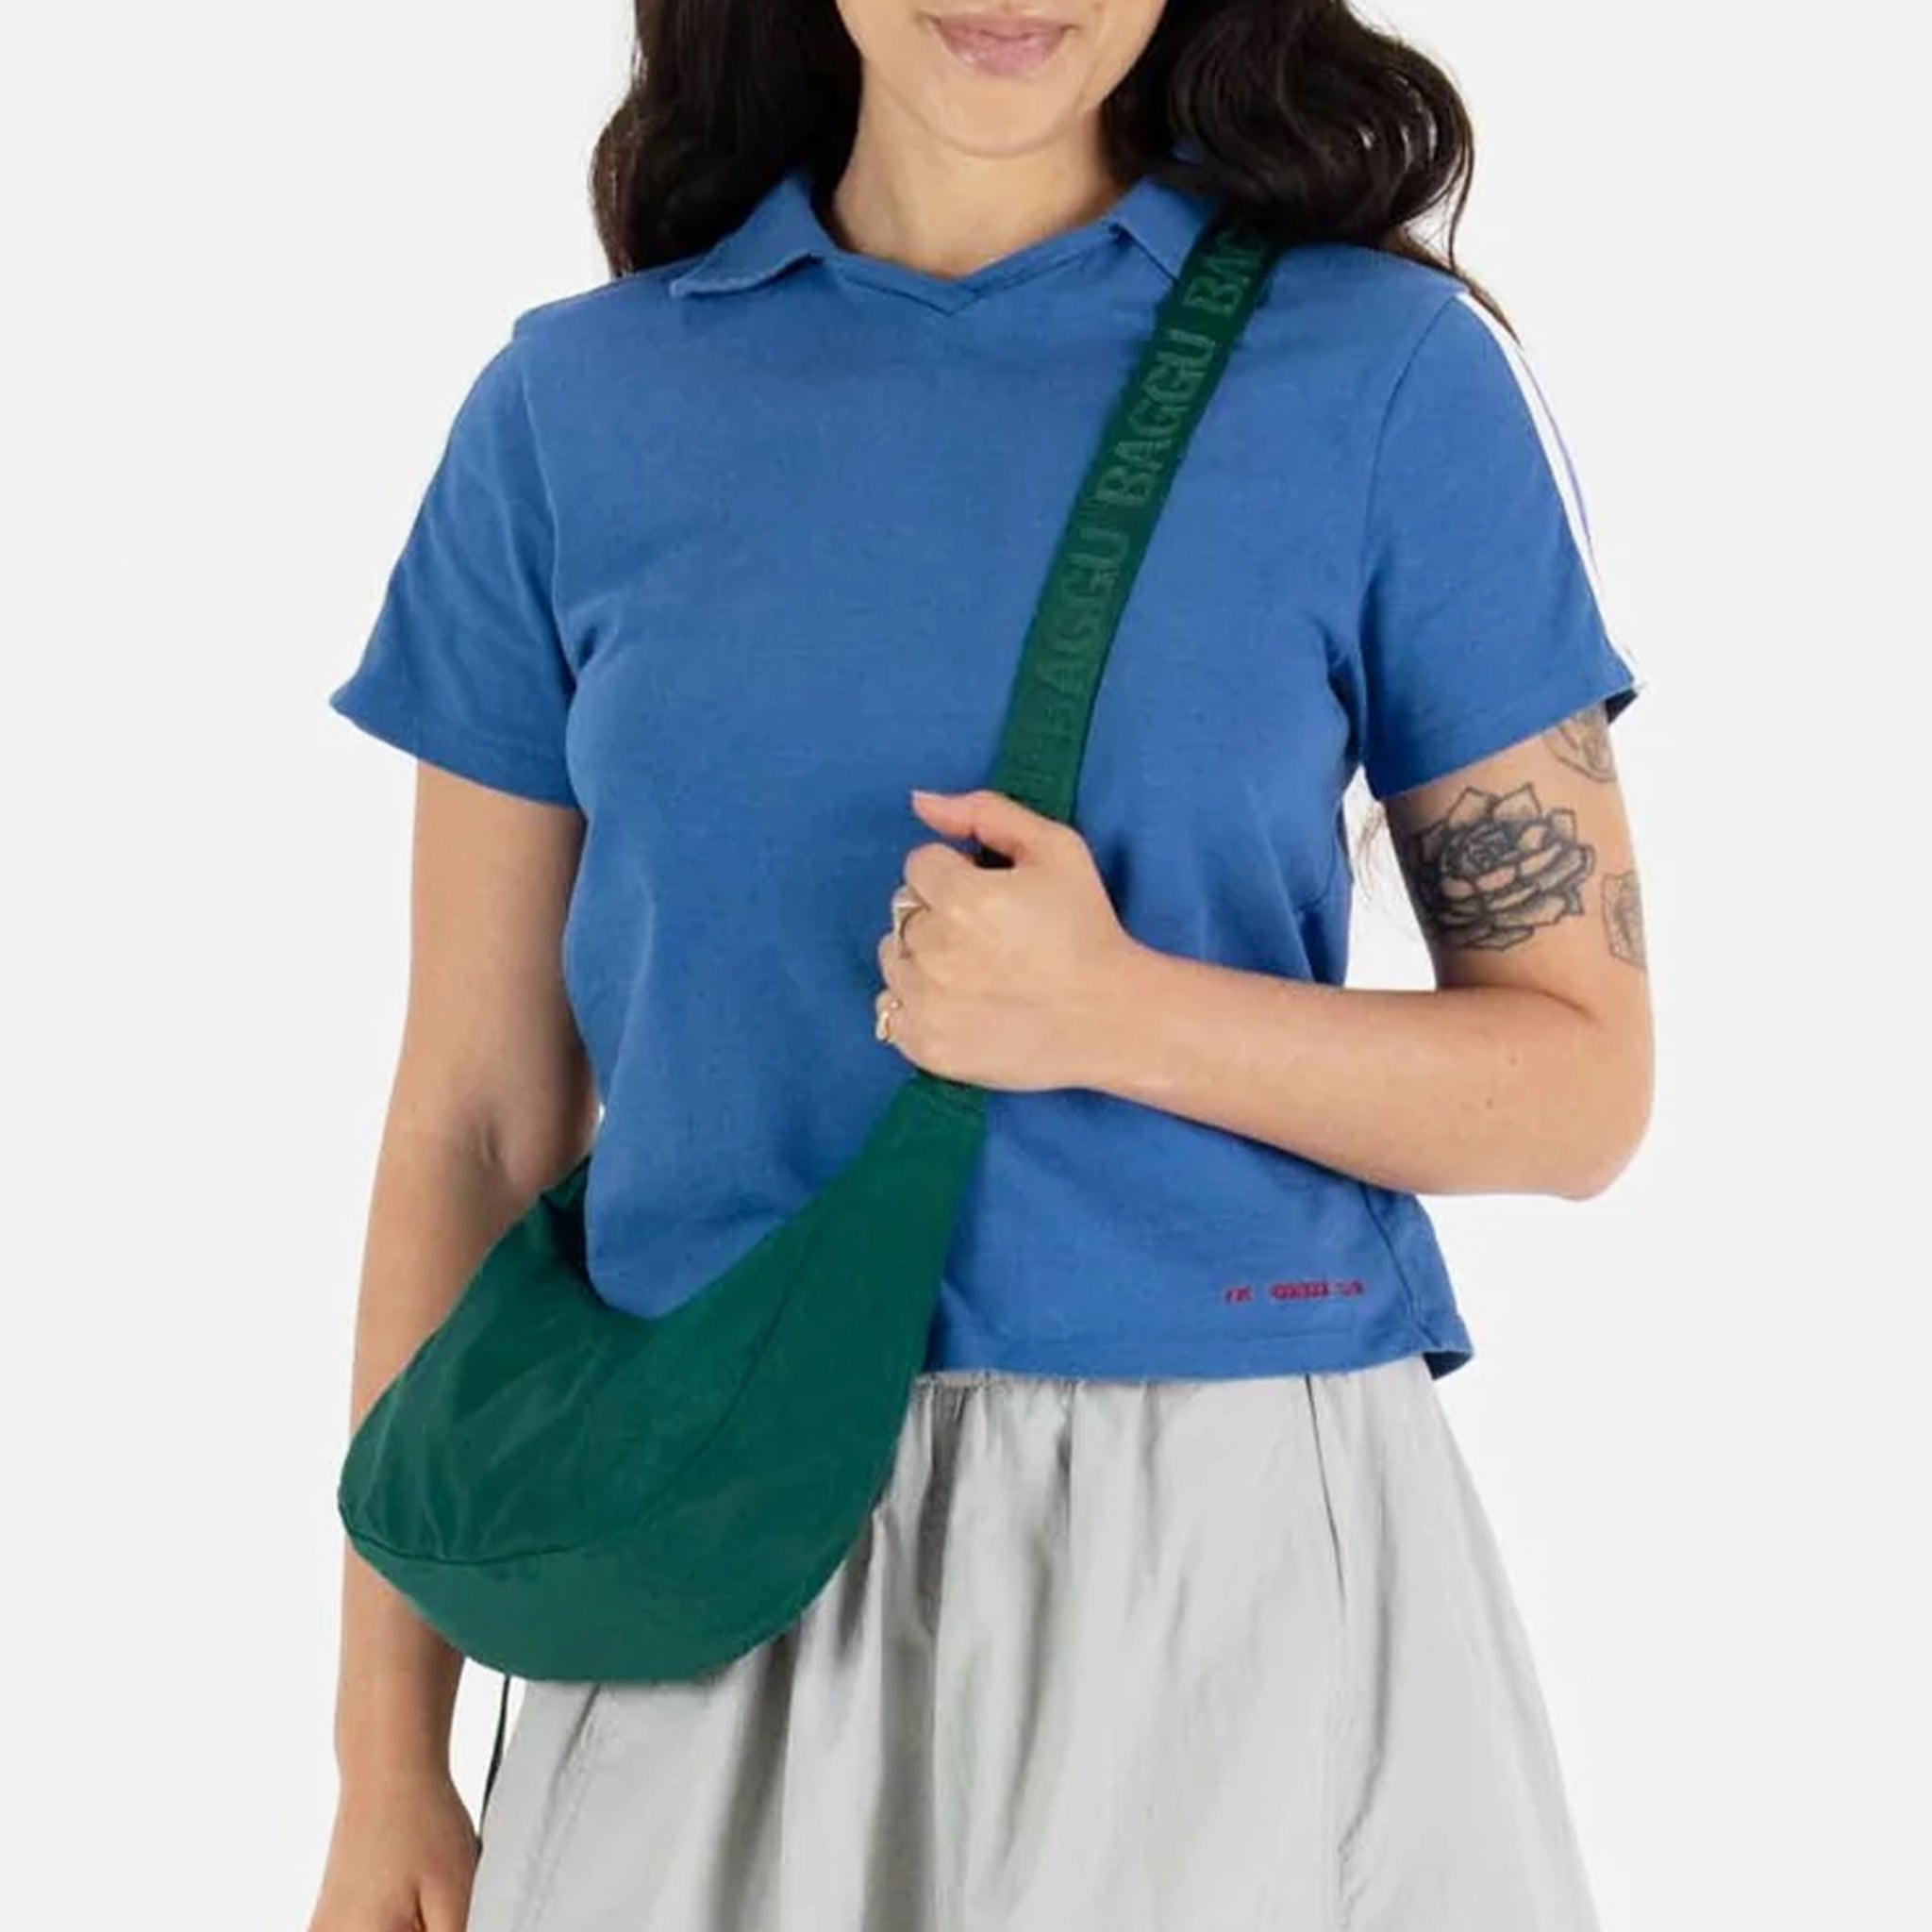 A green nylon shoulder / crossbody handbag with an adjustable strap.